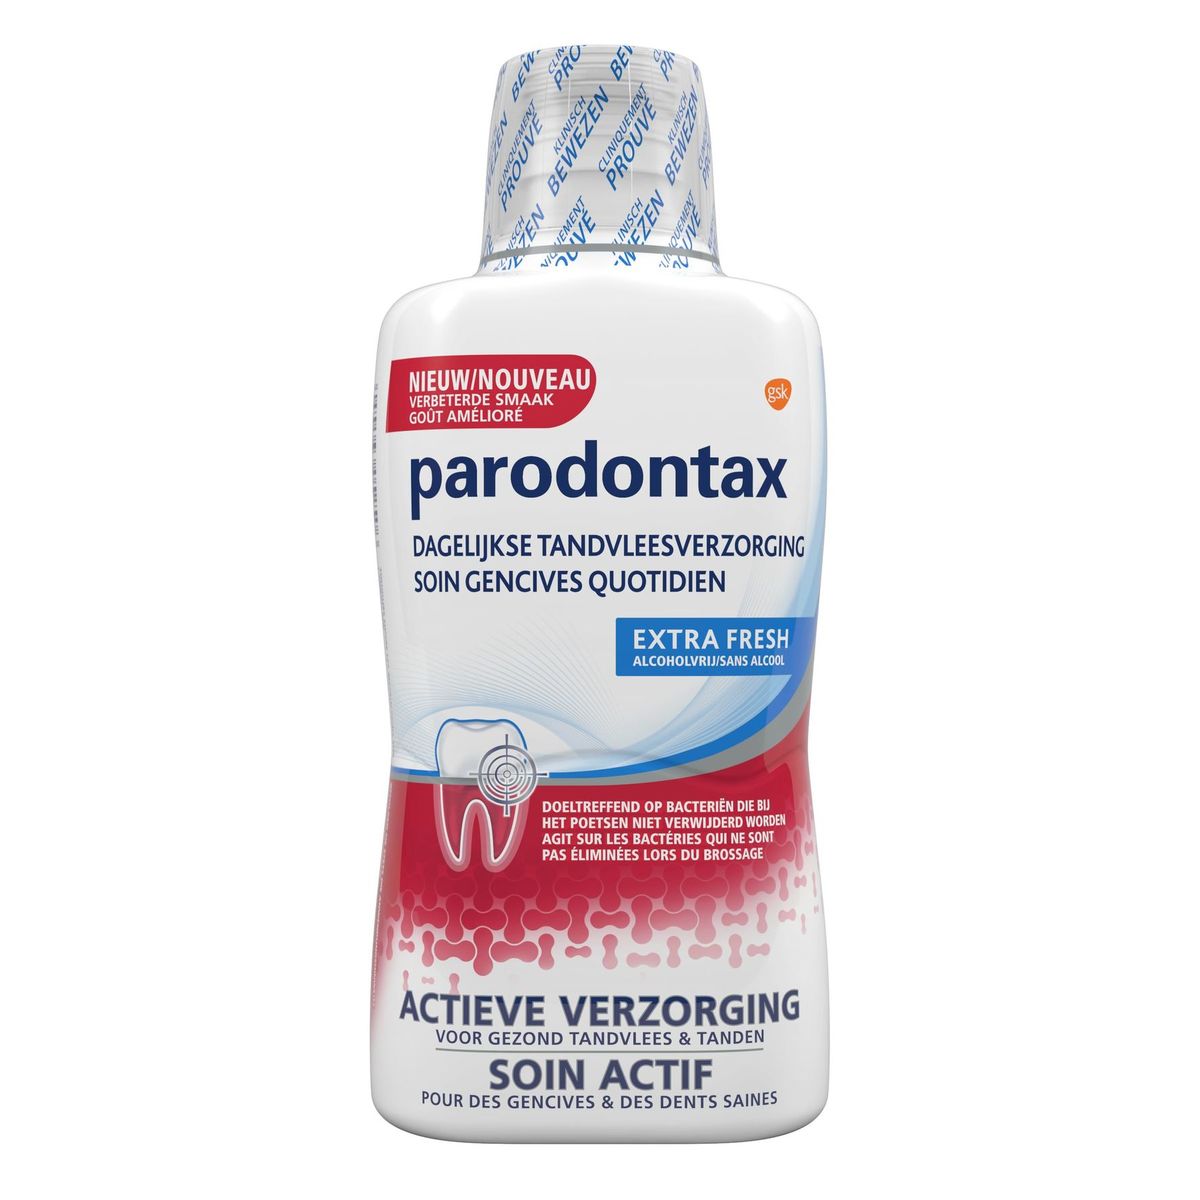 Parodontax Daily Care Mondwater voor gezond tandvlees 500 ml